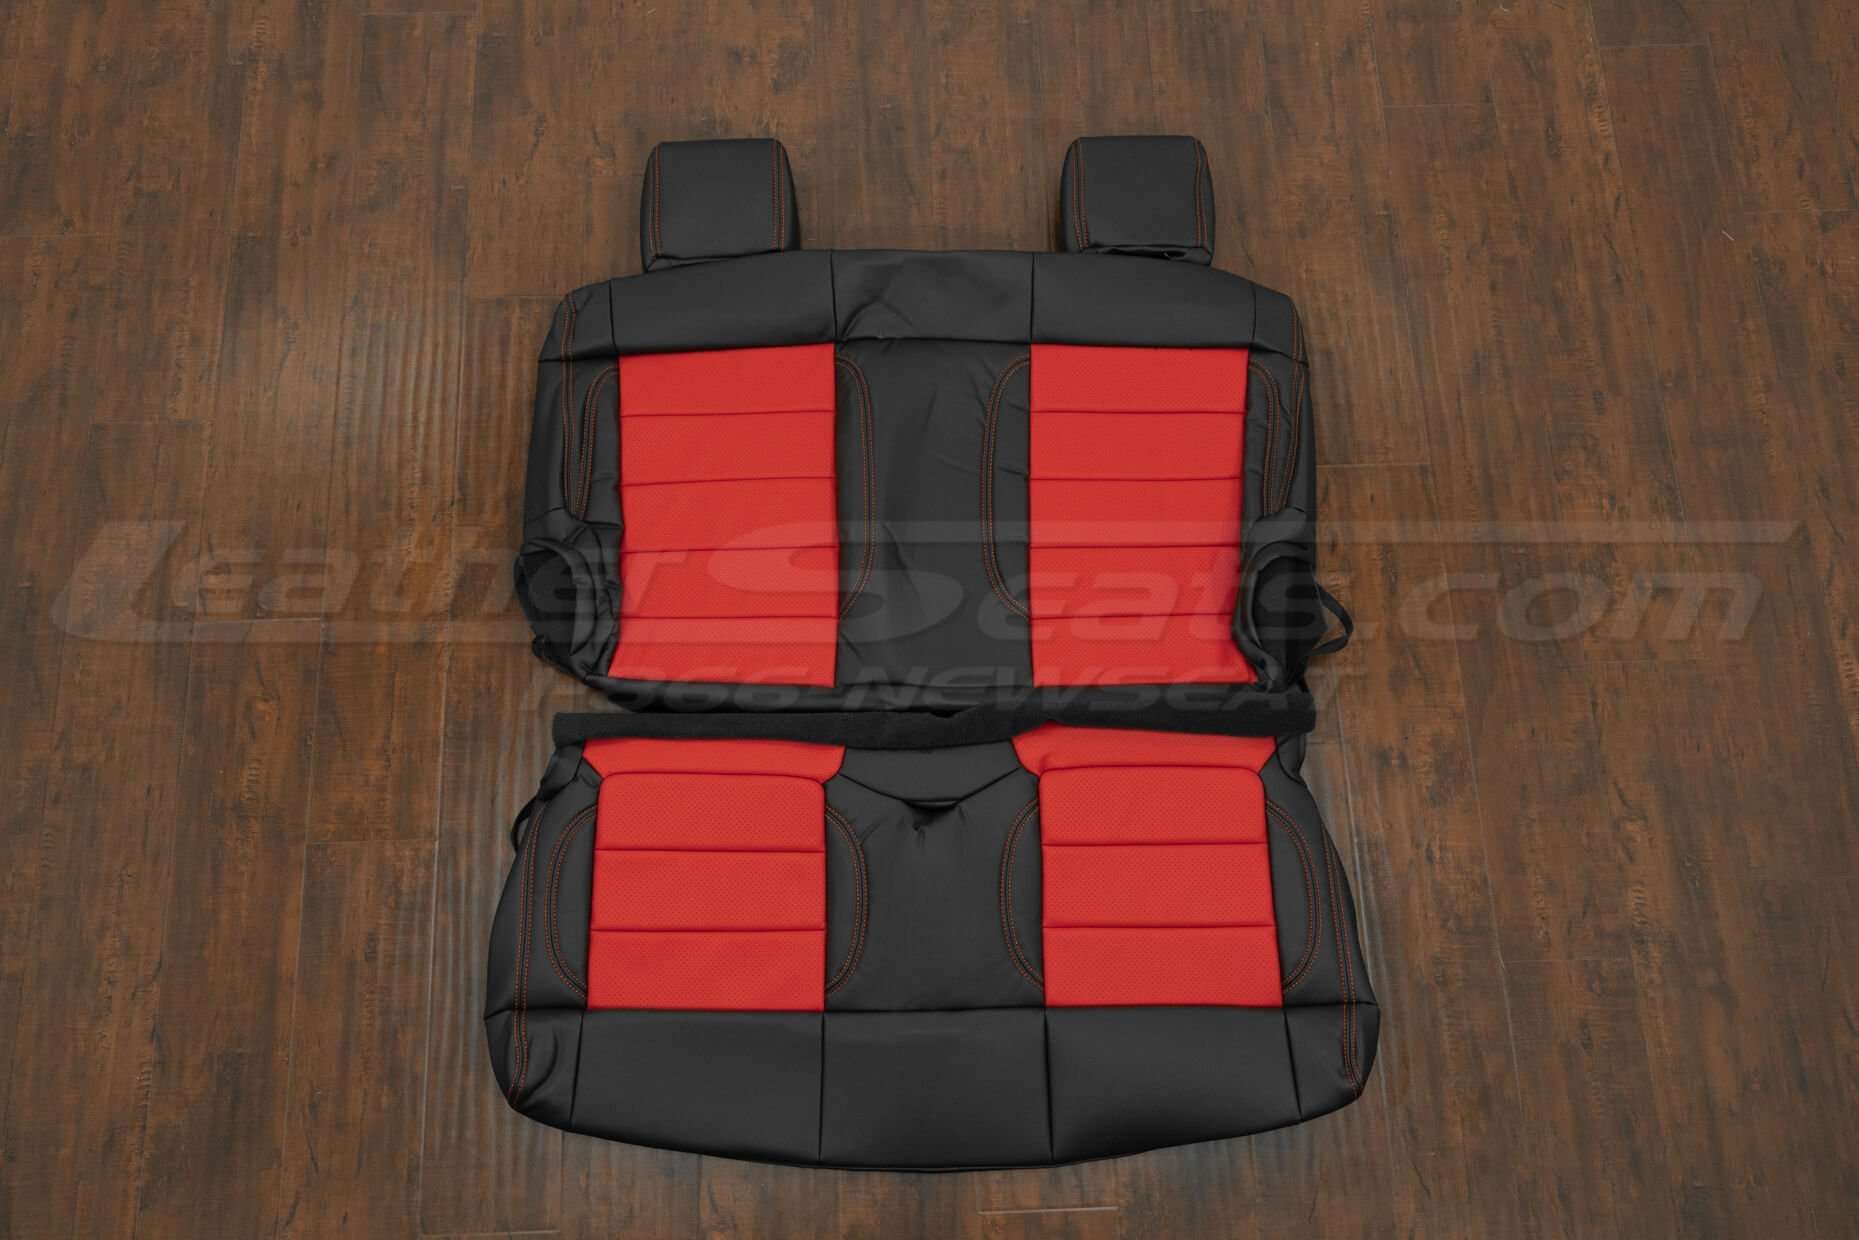 07-10 Jeep Wrangler Upholstery Kit - Black / Bright Red - Rear seat upholstery